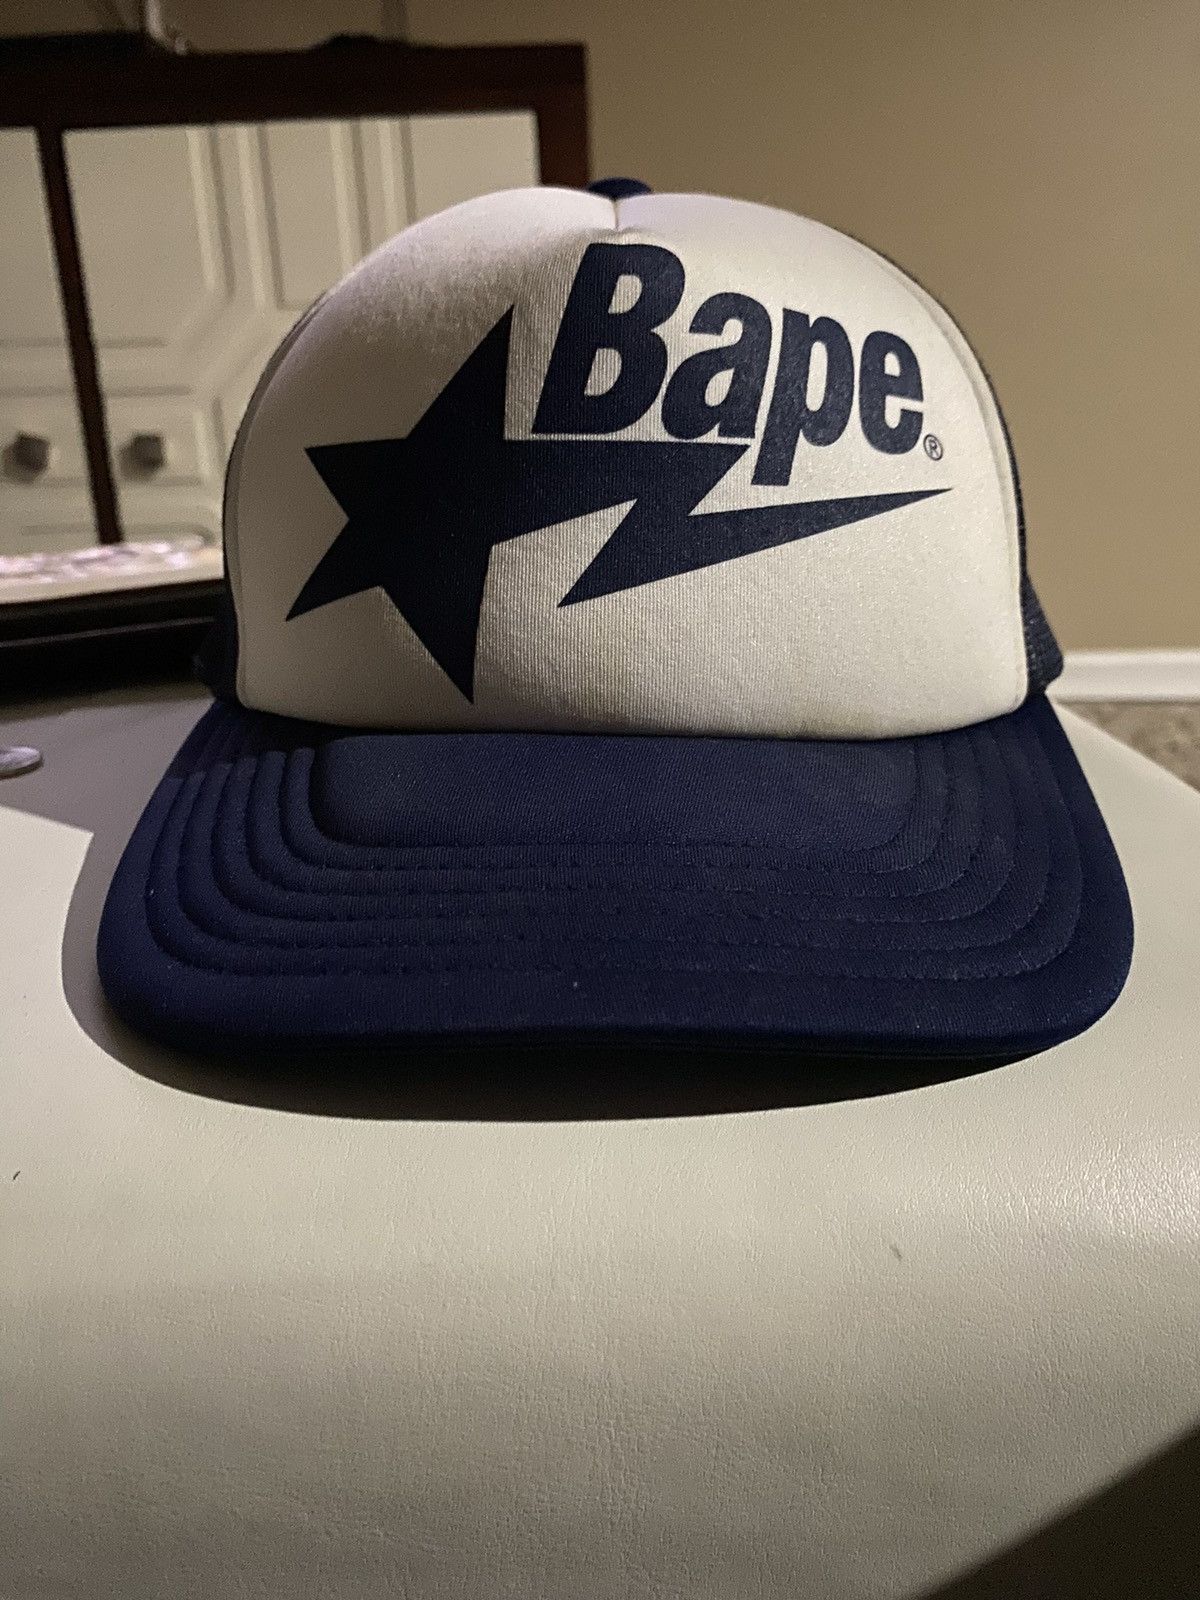 Bape BAPE Sta Mesh Cap | Grailed